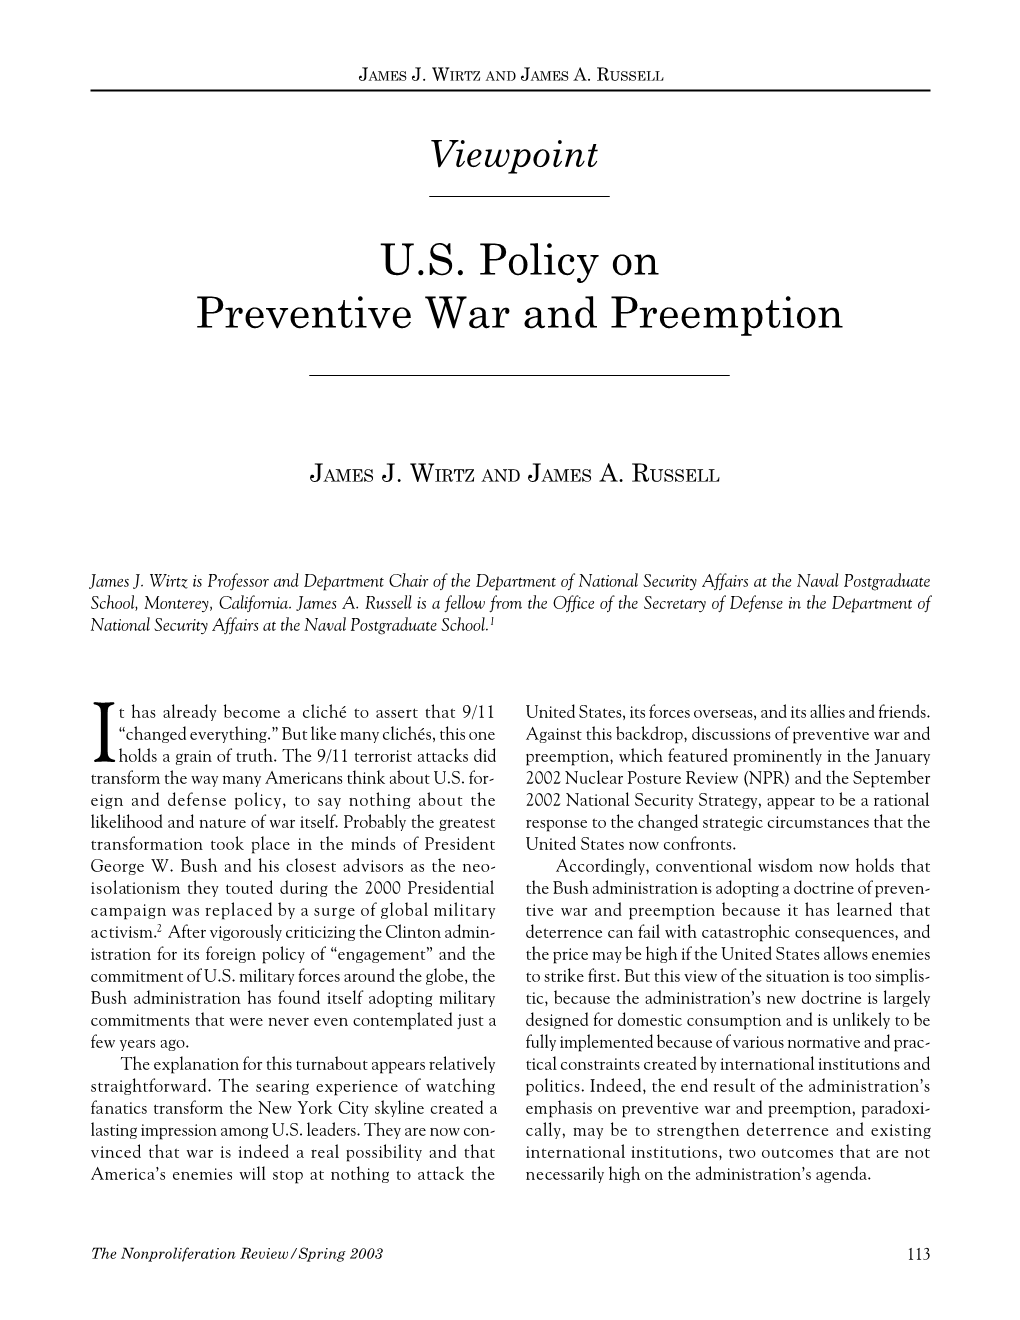 NPR10.1: U.S. Policy on Preventive War and Preemption